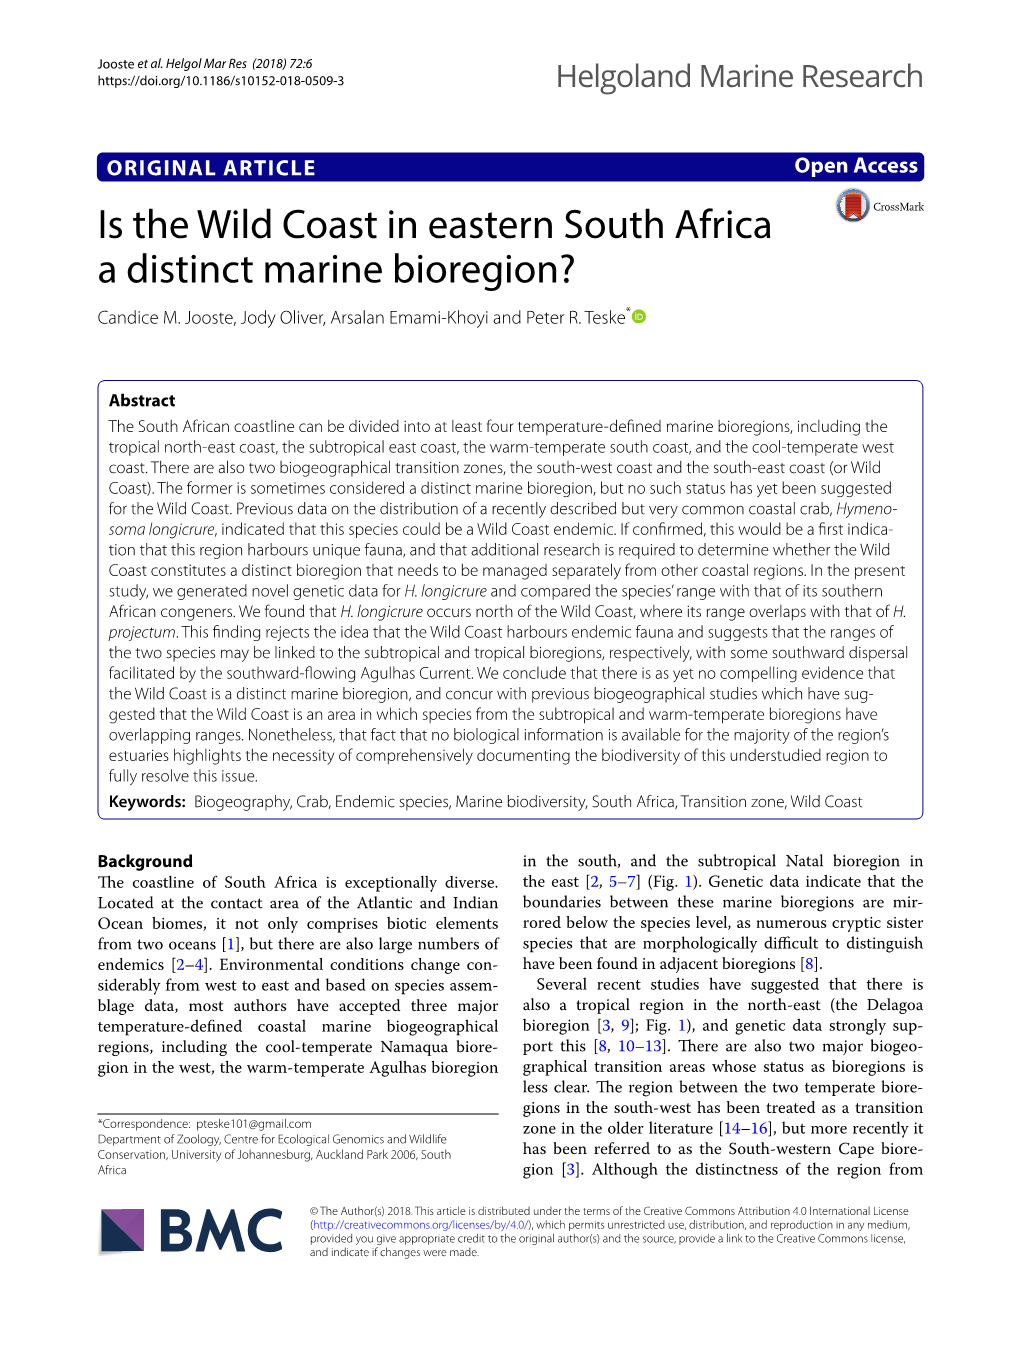 Is the Wild Coast in Eastern South Africa a Distinct Marine Bioregion? Candice M